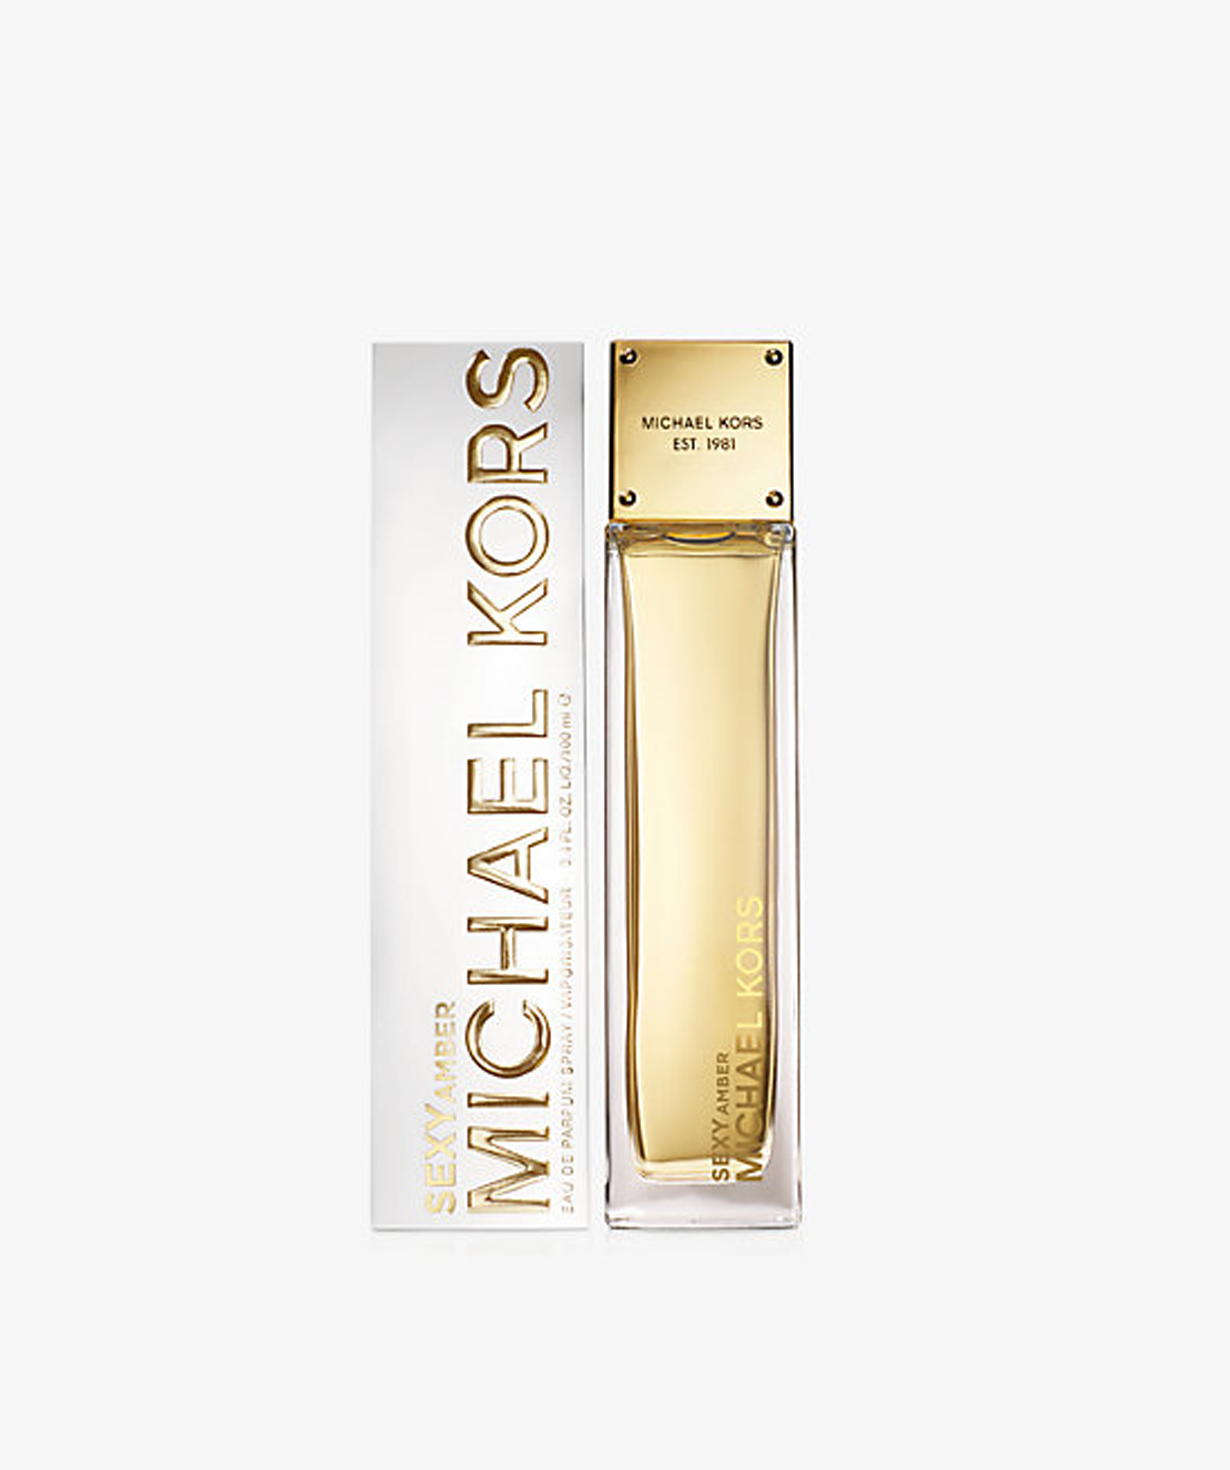 Perfume «Michael Kors» Sexy Amber, for women, 100 ml